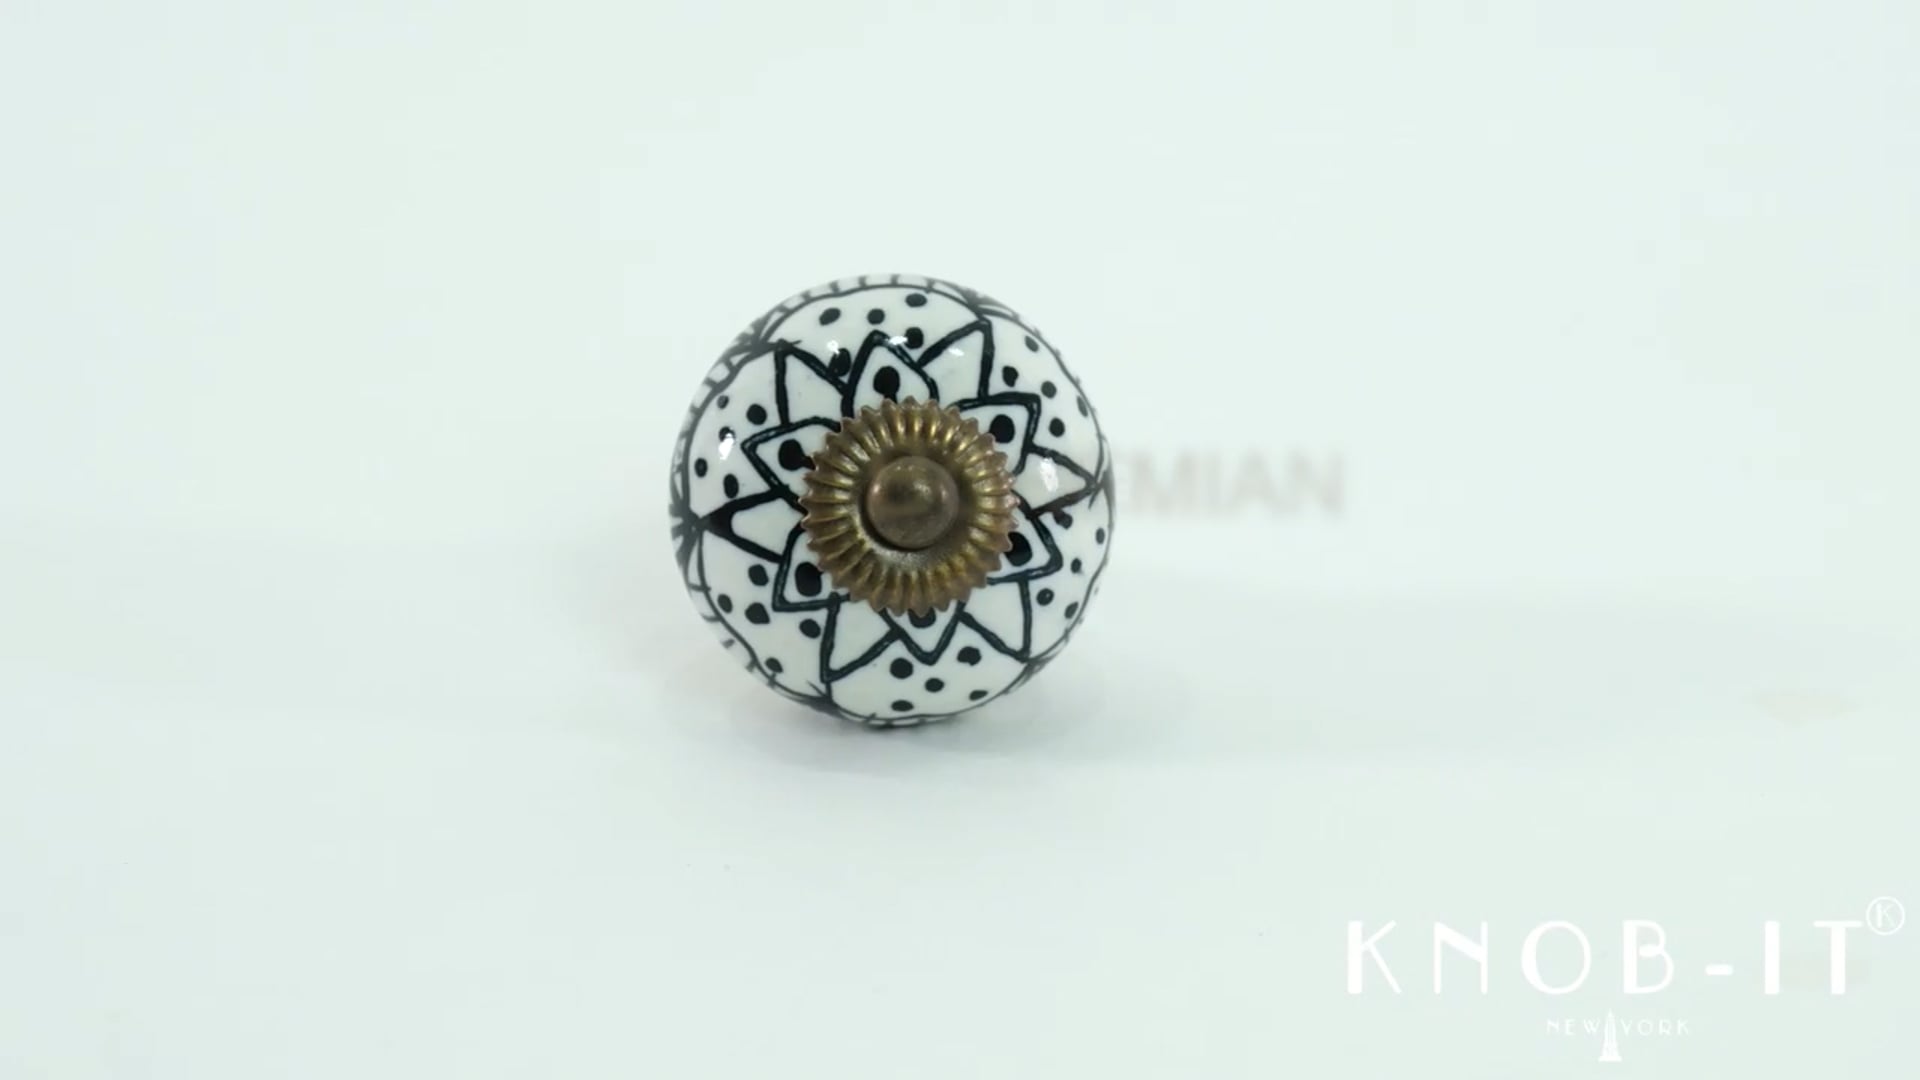 Knob-It Vintage Handpainted Ceramic Knobs, Set of 12, Pink/White/Gold